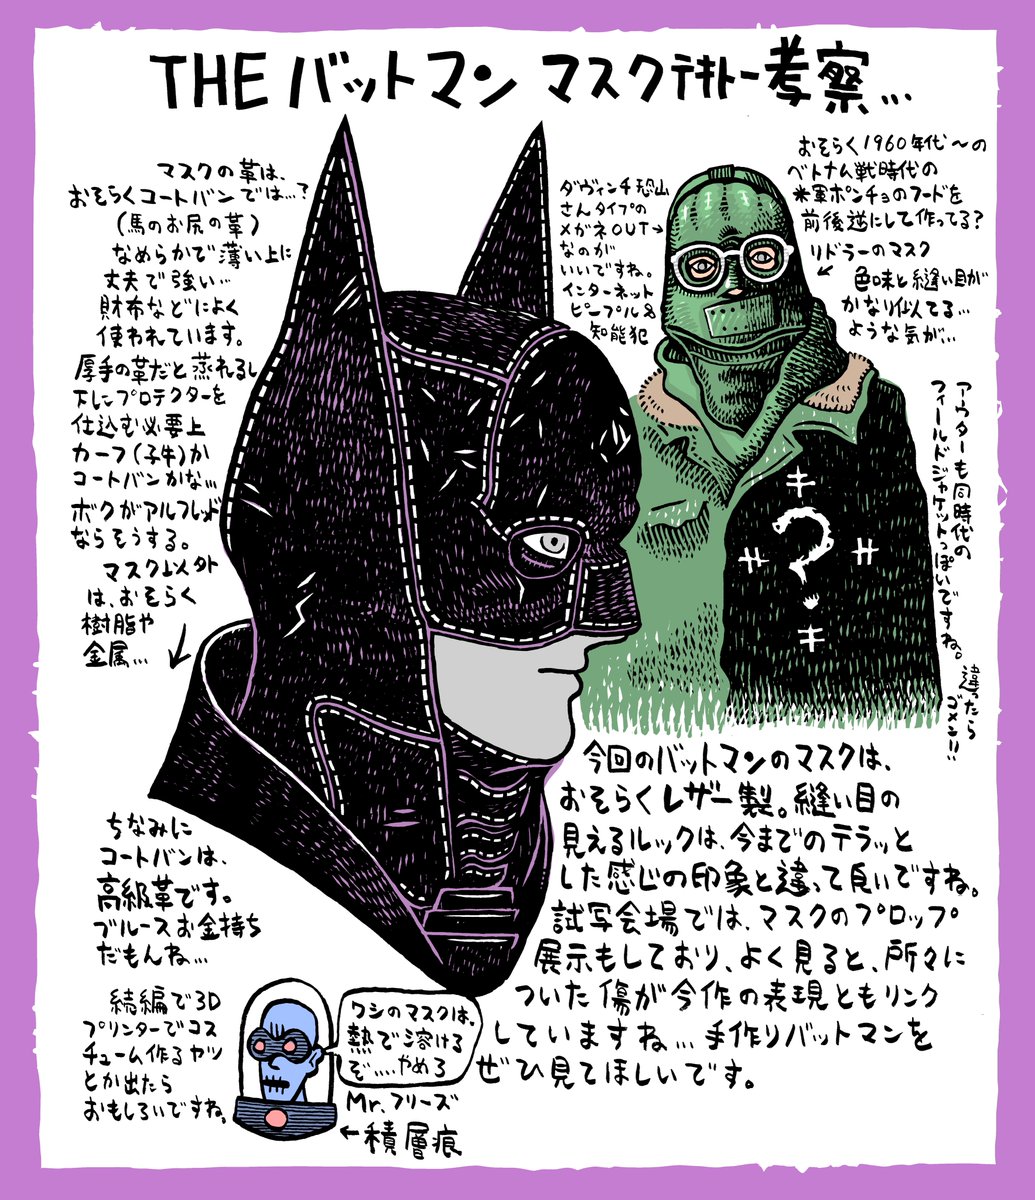 THE BATMAN-ザ・バットマン-のマスクについてちょっとした感想と考察… 